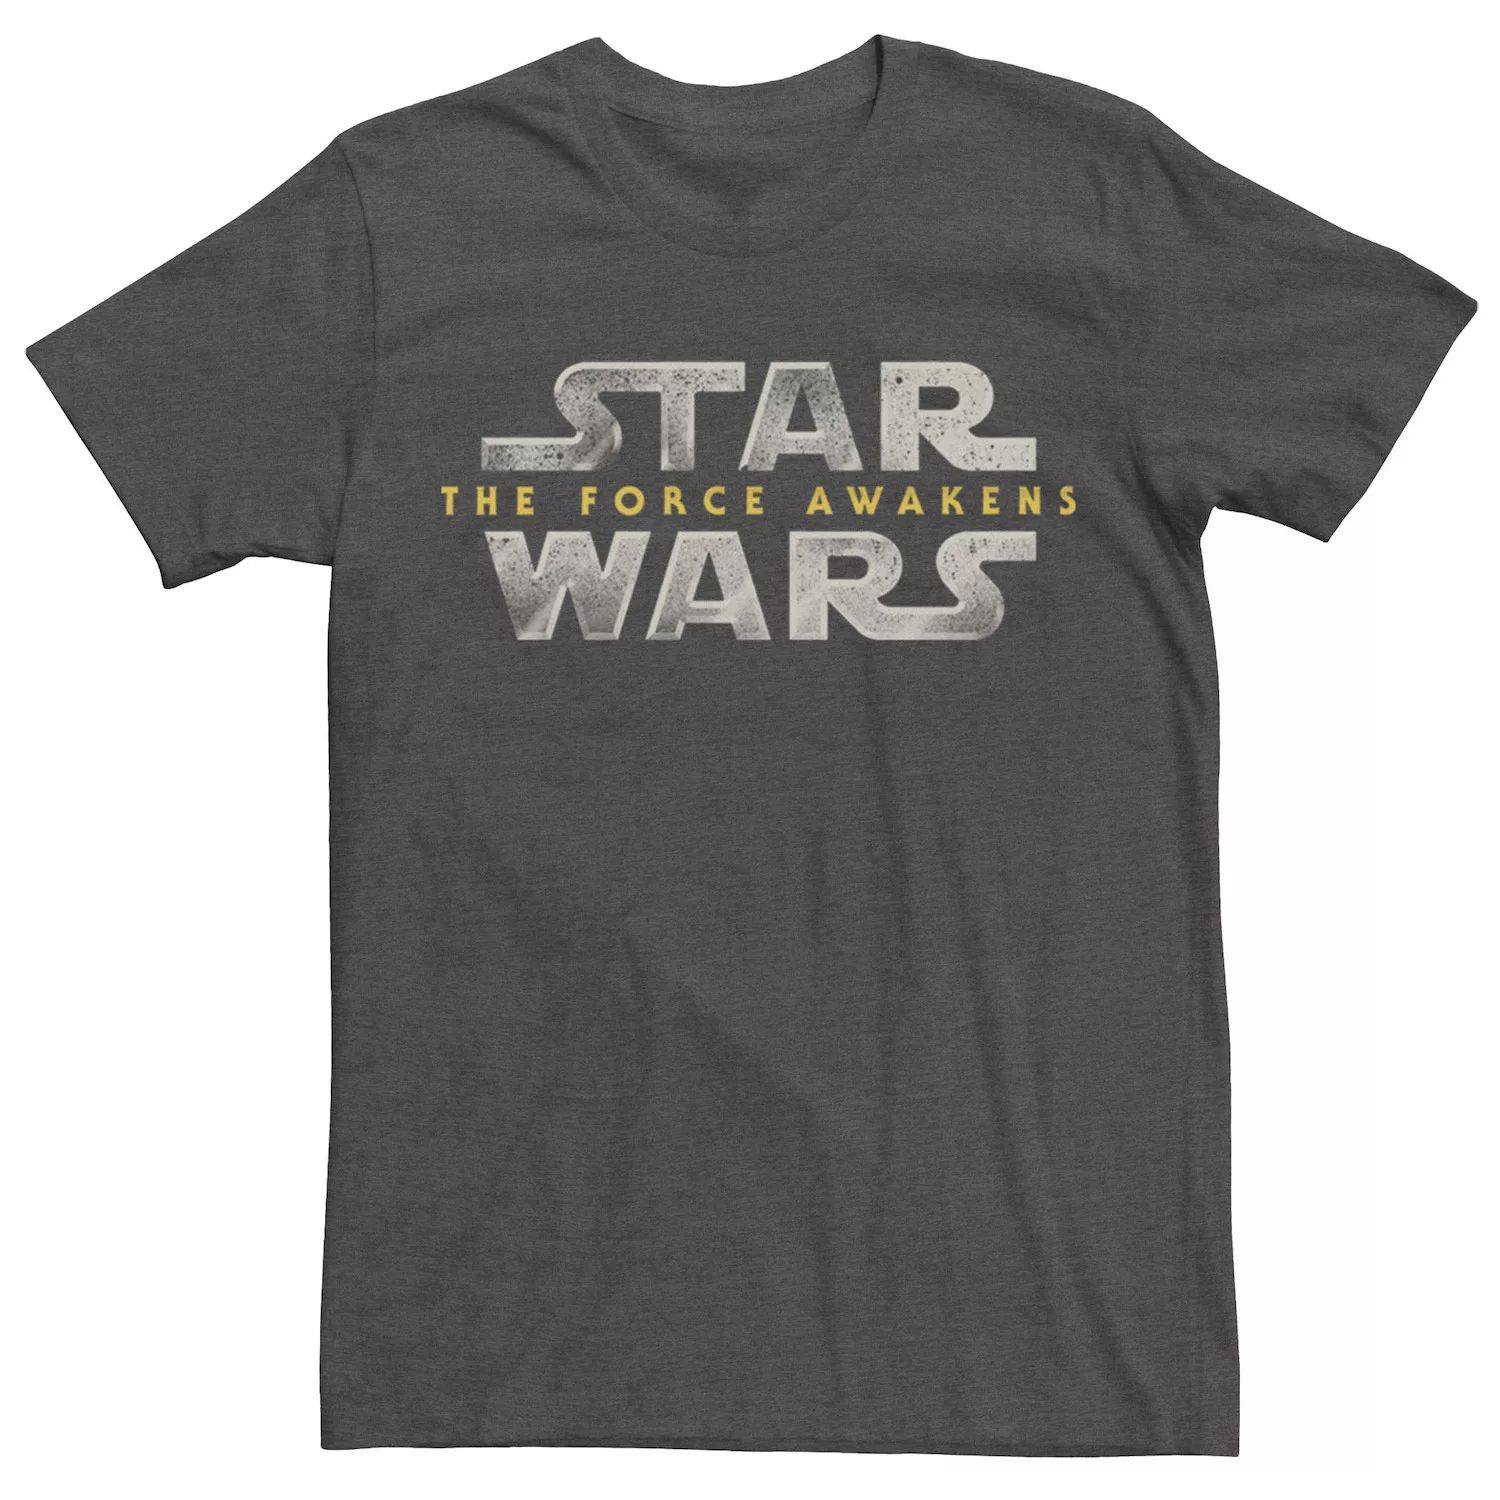 Мужская футболка с логотипом The Force Awakens Title Star Wars